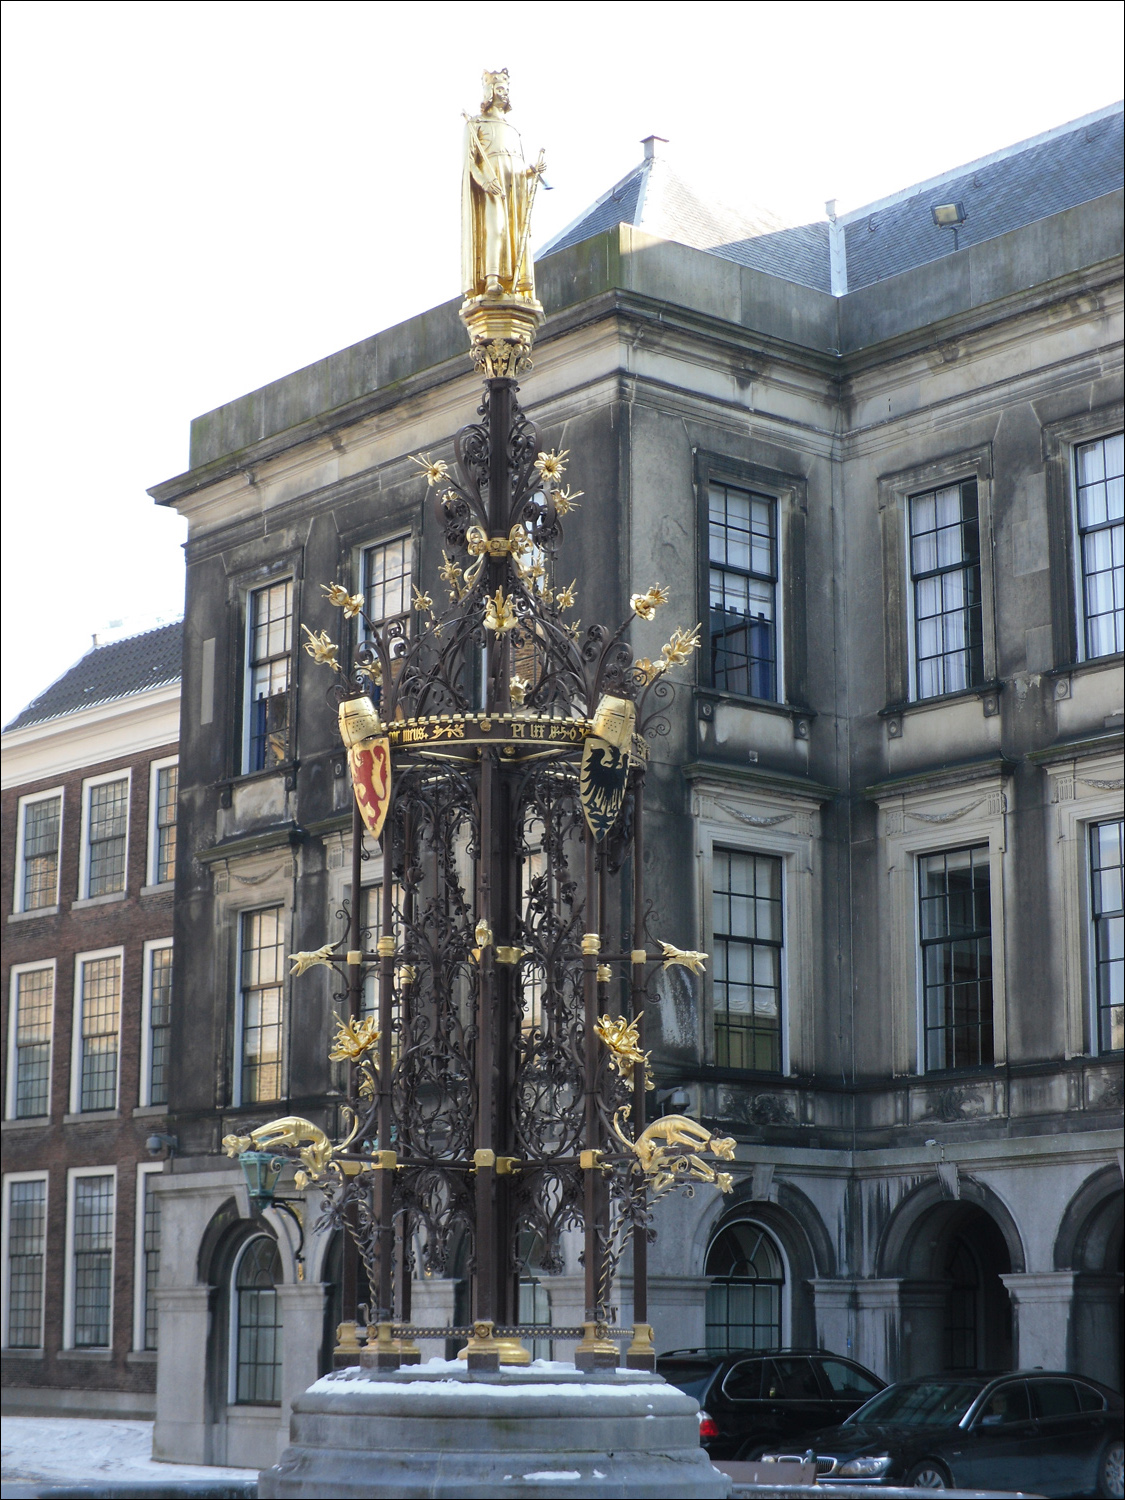 Hague-statue w/crests in Binnenhof courtyard